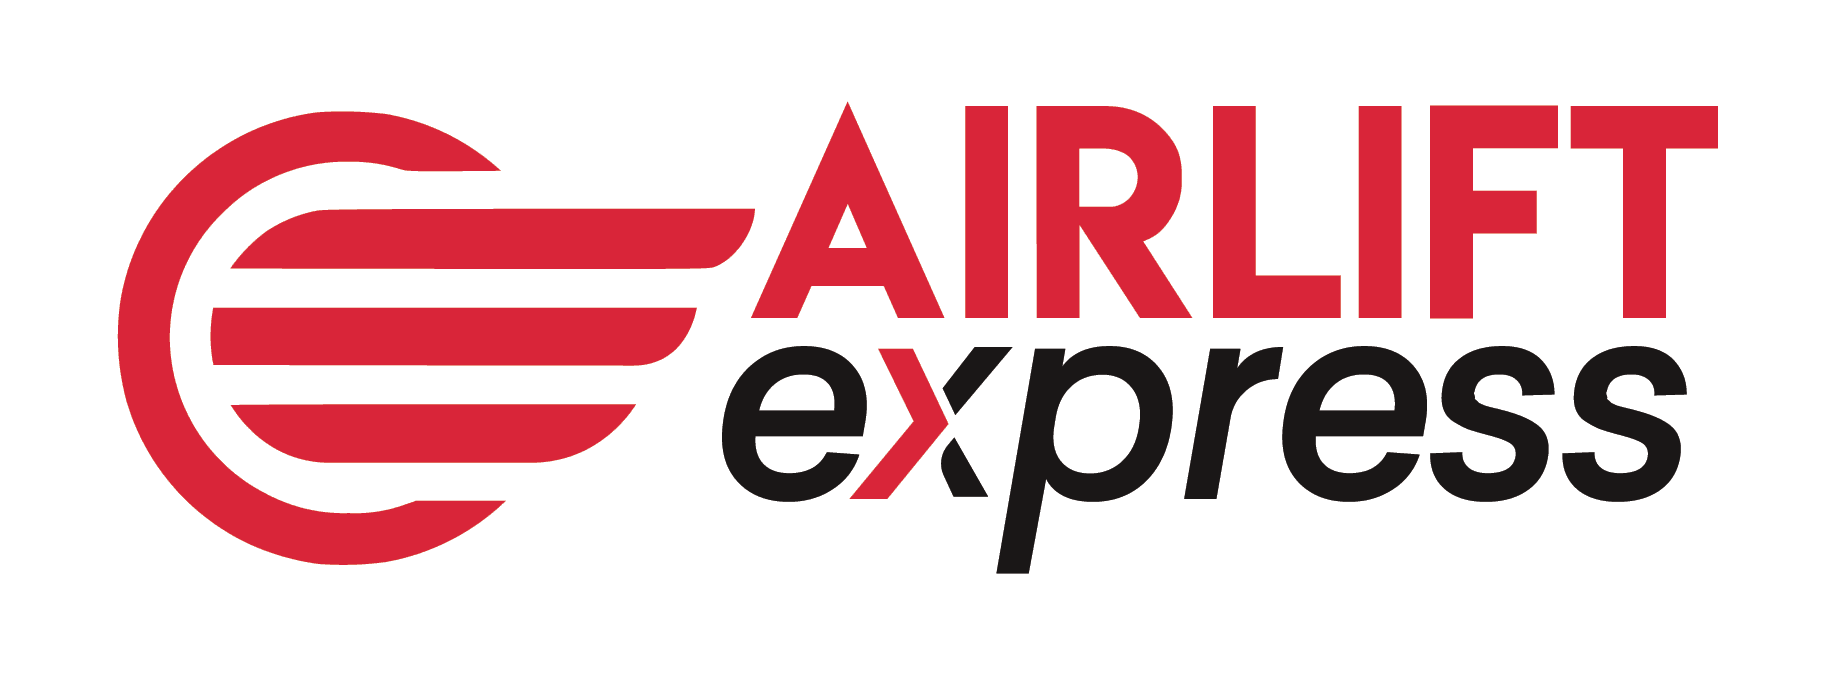 Airlift Express logo